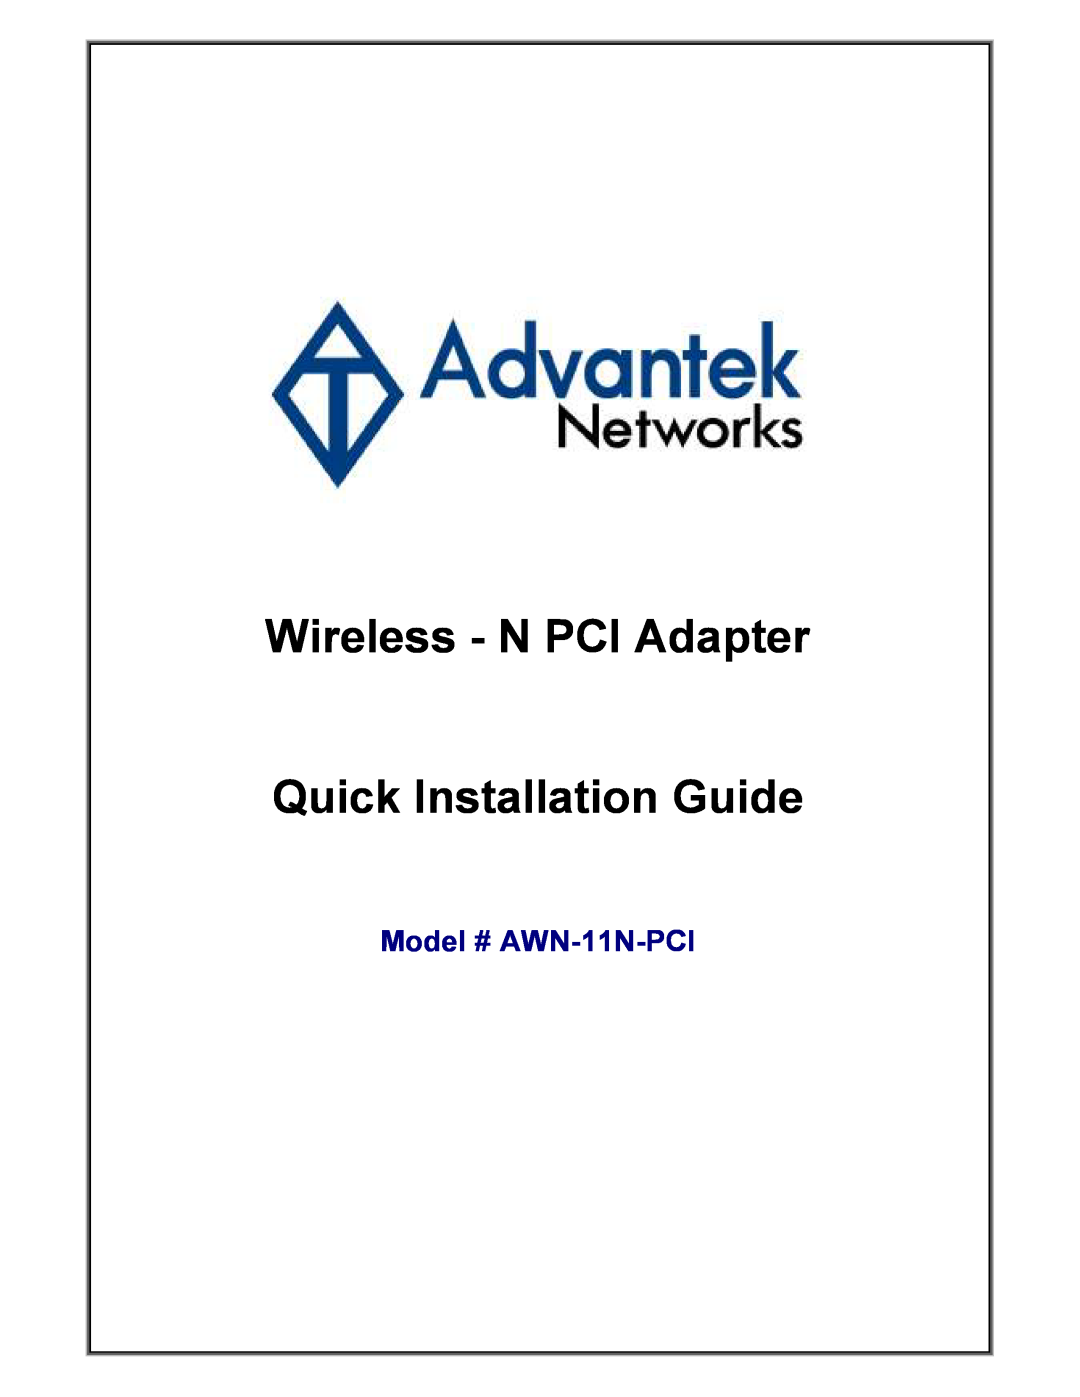 Advantek Networks manual Wireless - N PCI Adapter, Quick Installation Guide, Model # AWN-11N-PCI 